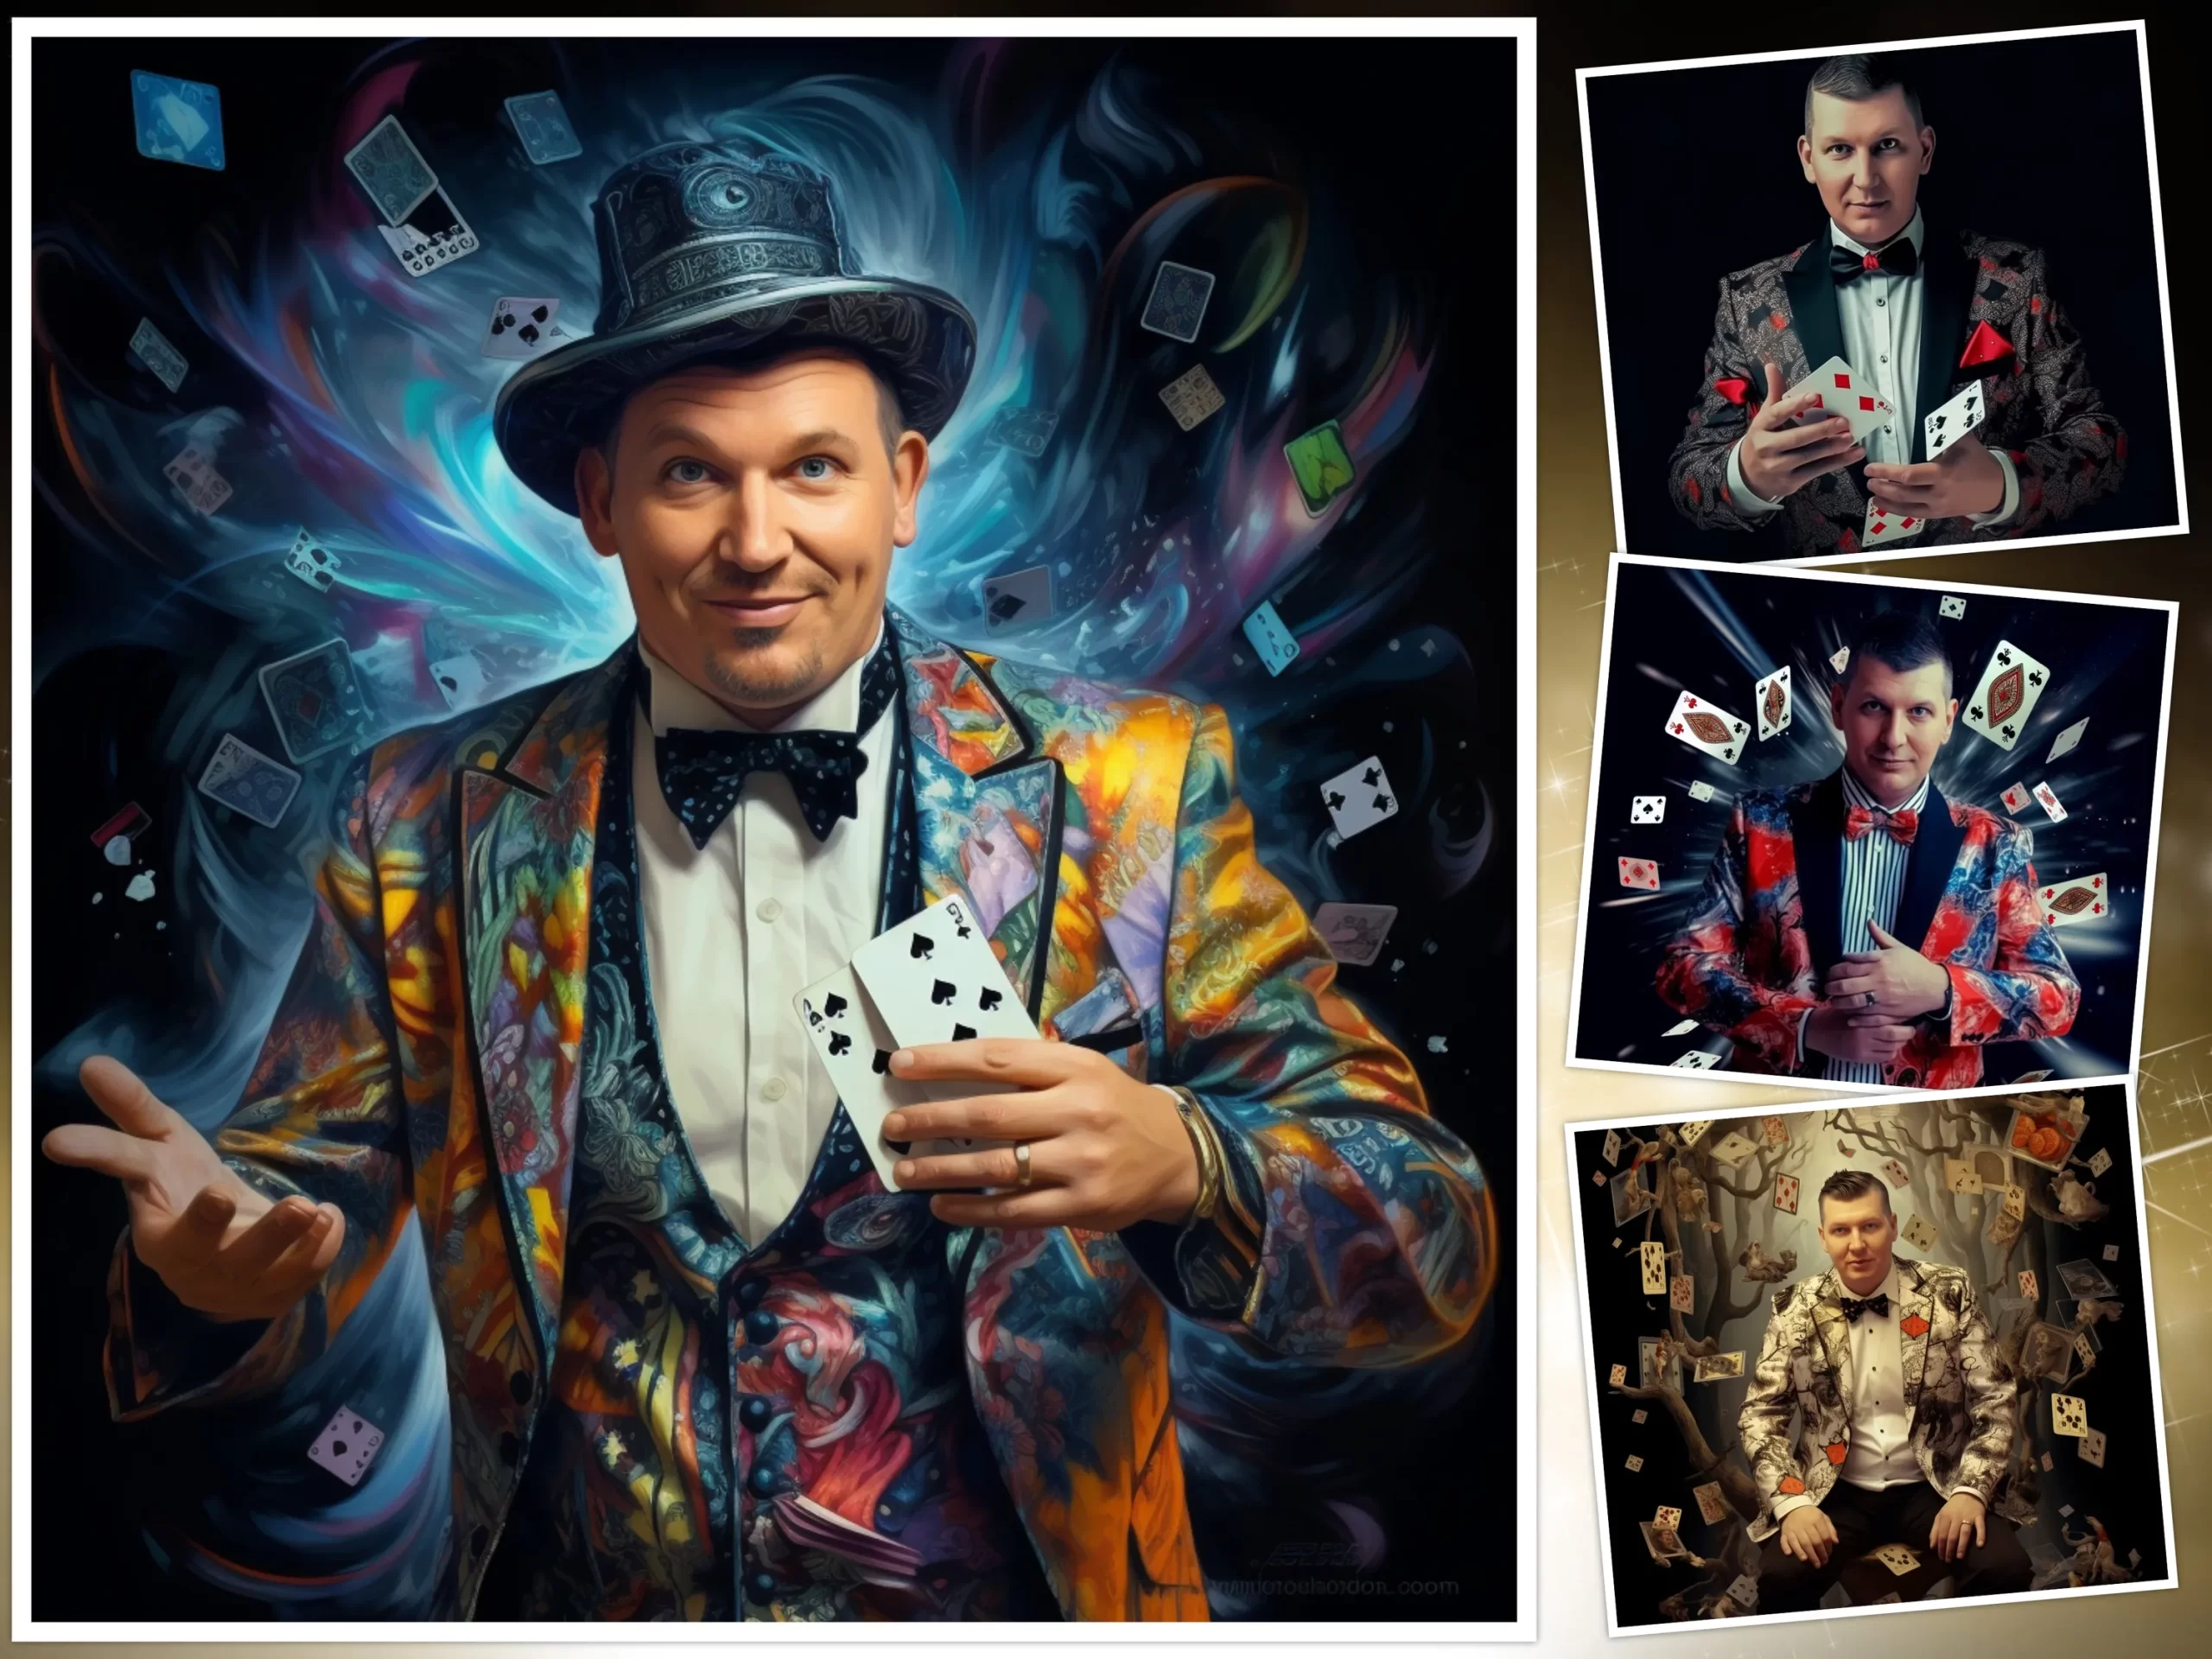 Mađioničar Vladimir | Profesionalni hrvatski mađioničar